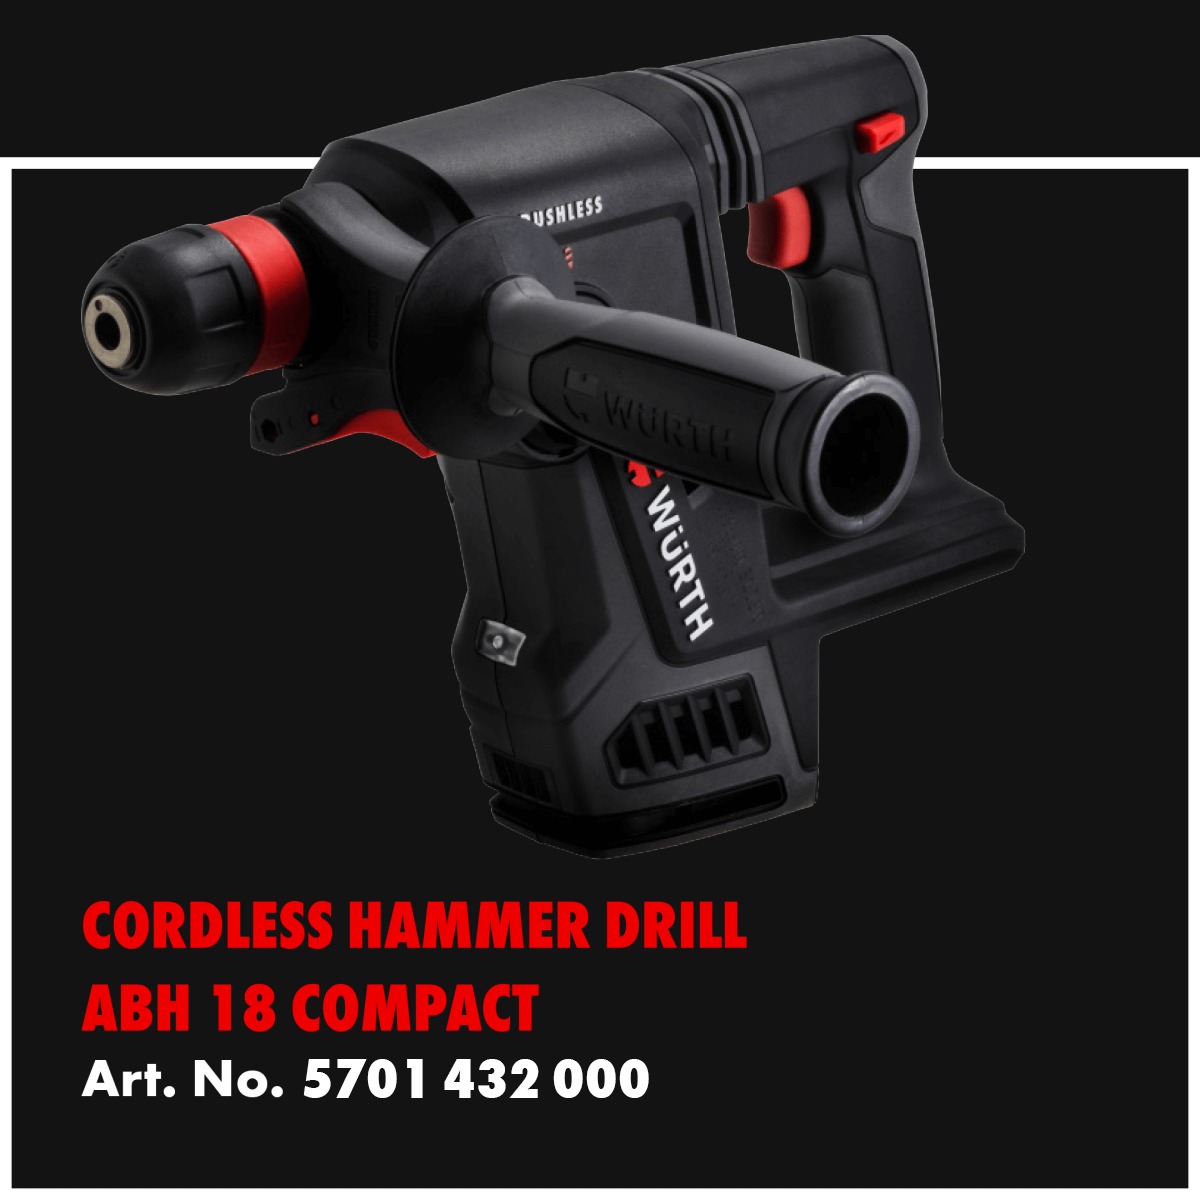 Cordless Hammer Drill ABH-18 Compact